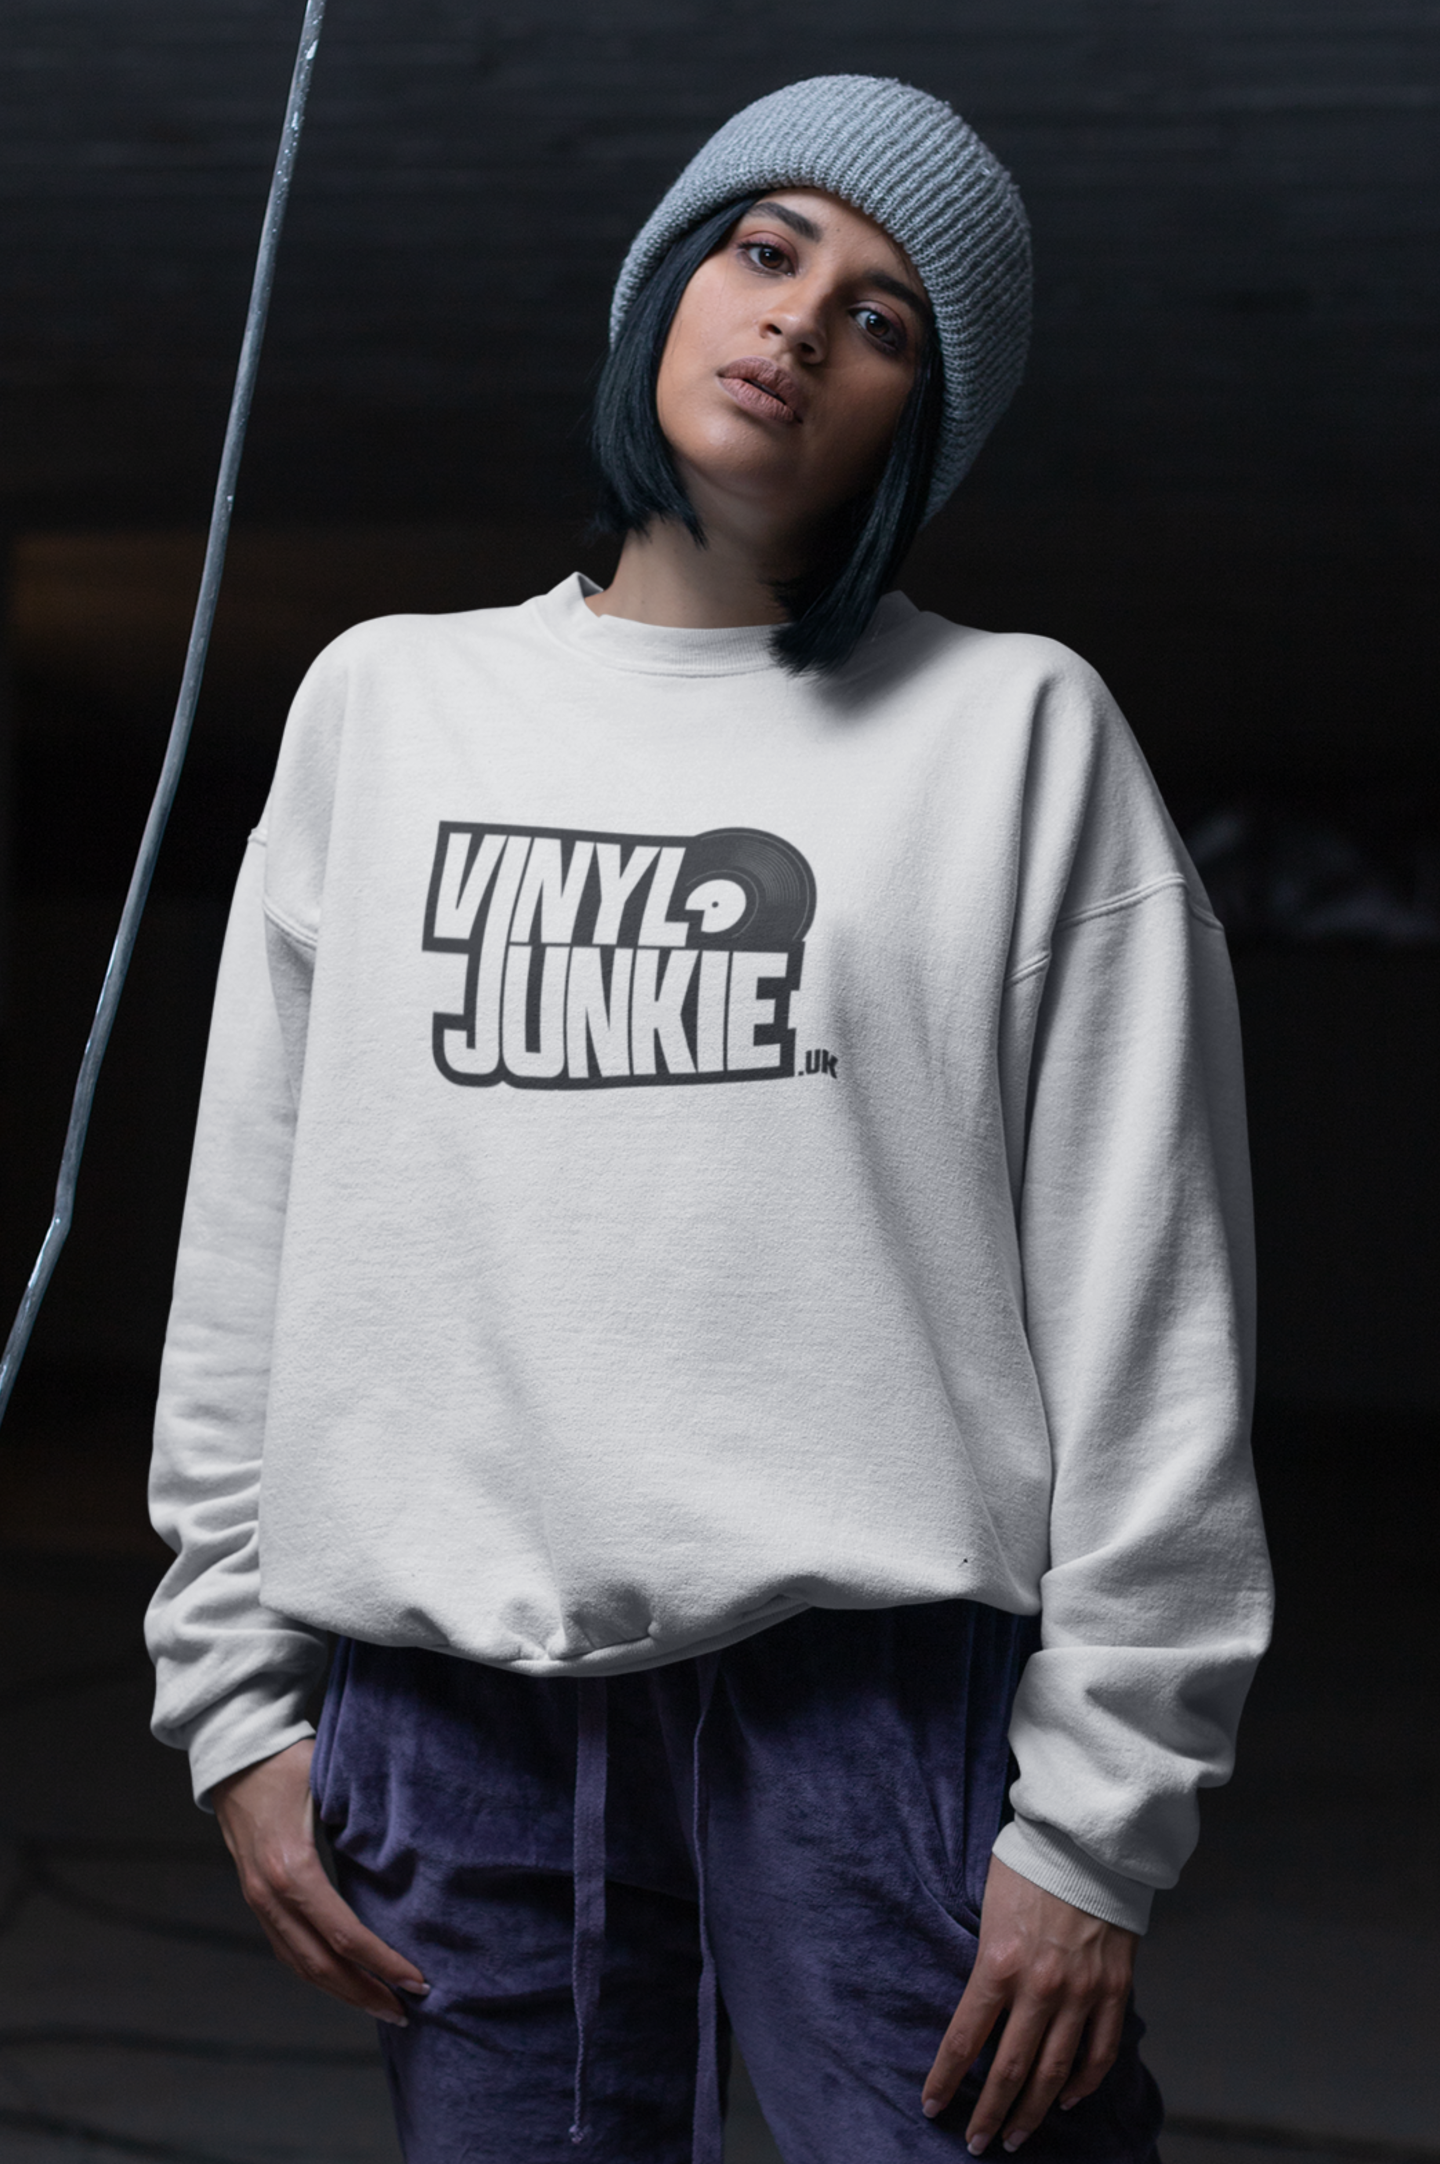 Vinyl Junkie UK - Unisex Sweatshirt - Vinyl Junkie UK